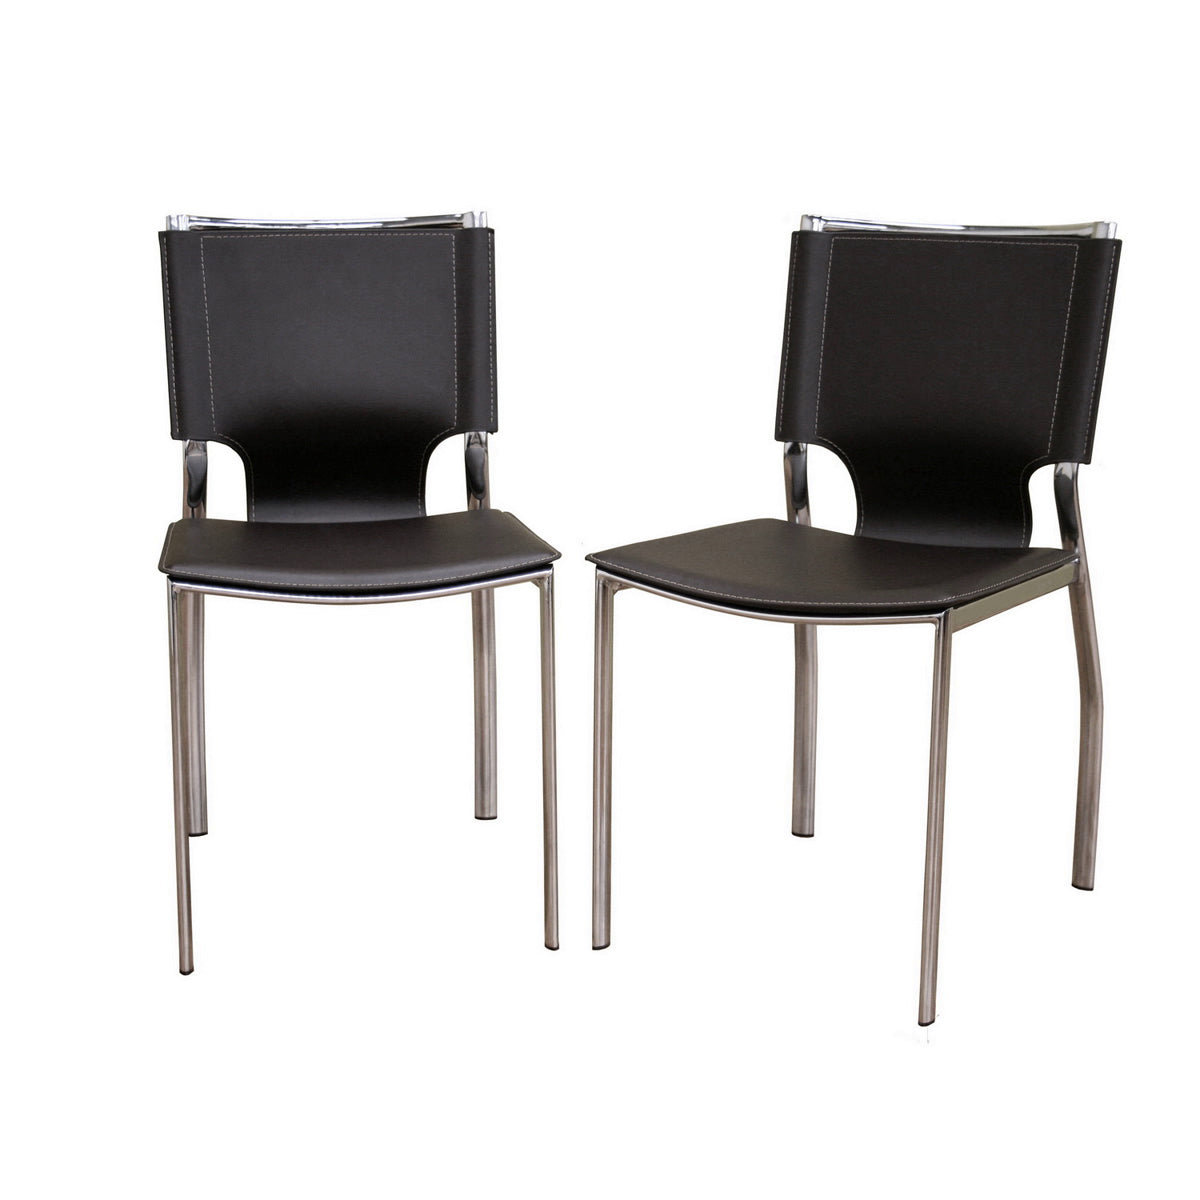 Baxton Studio Dark Brown Leather Dining Chair with Chrome Frame (Set of 2) Baxton Studio-dining chair-Minimal And Modern - 1